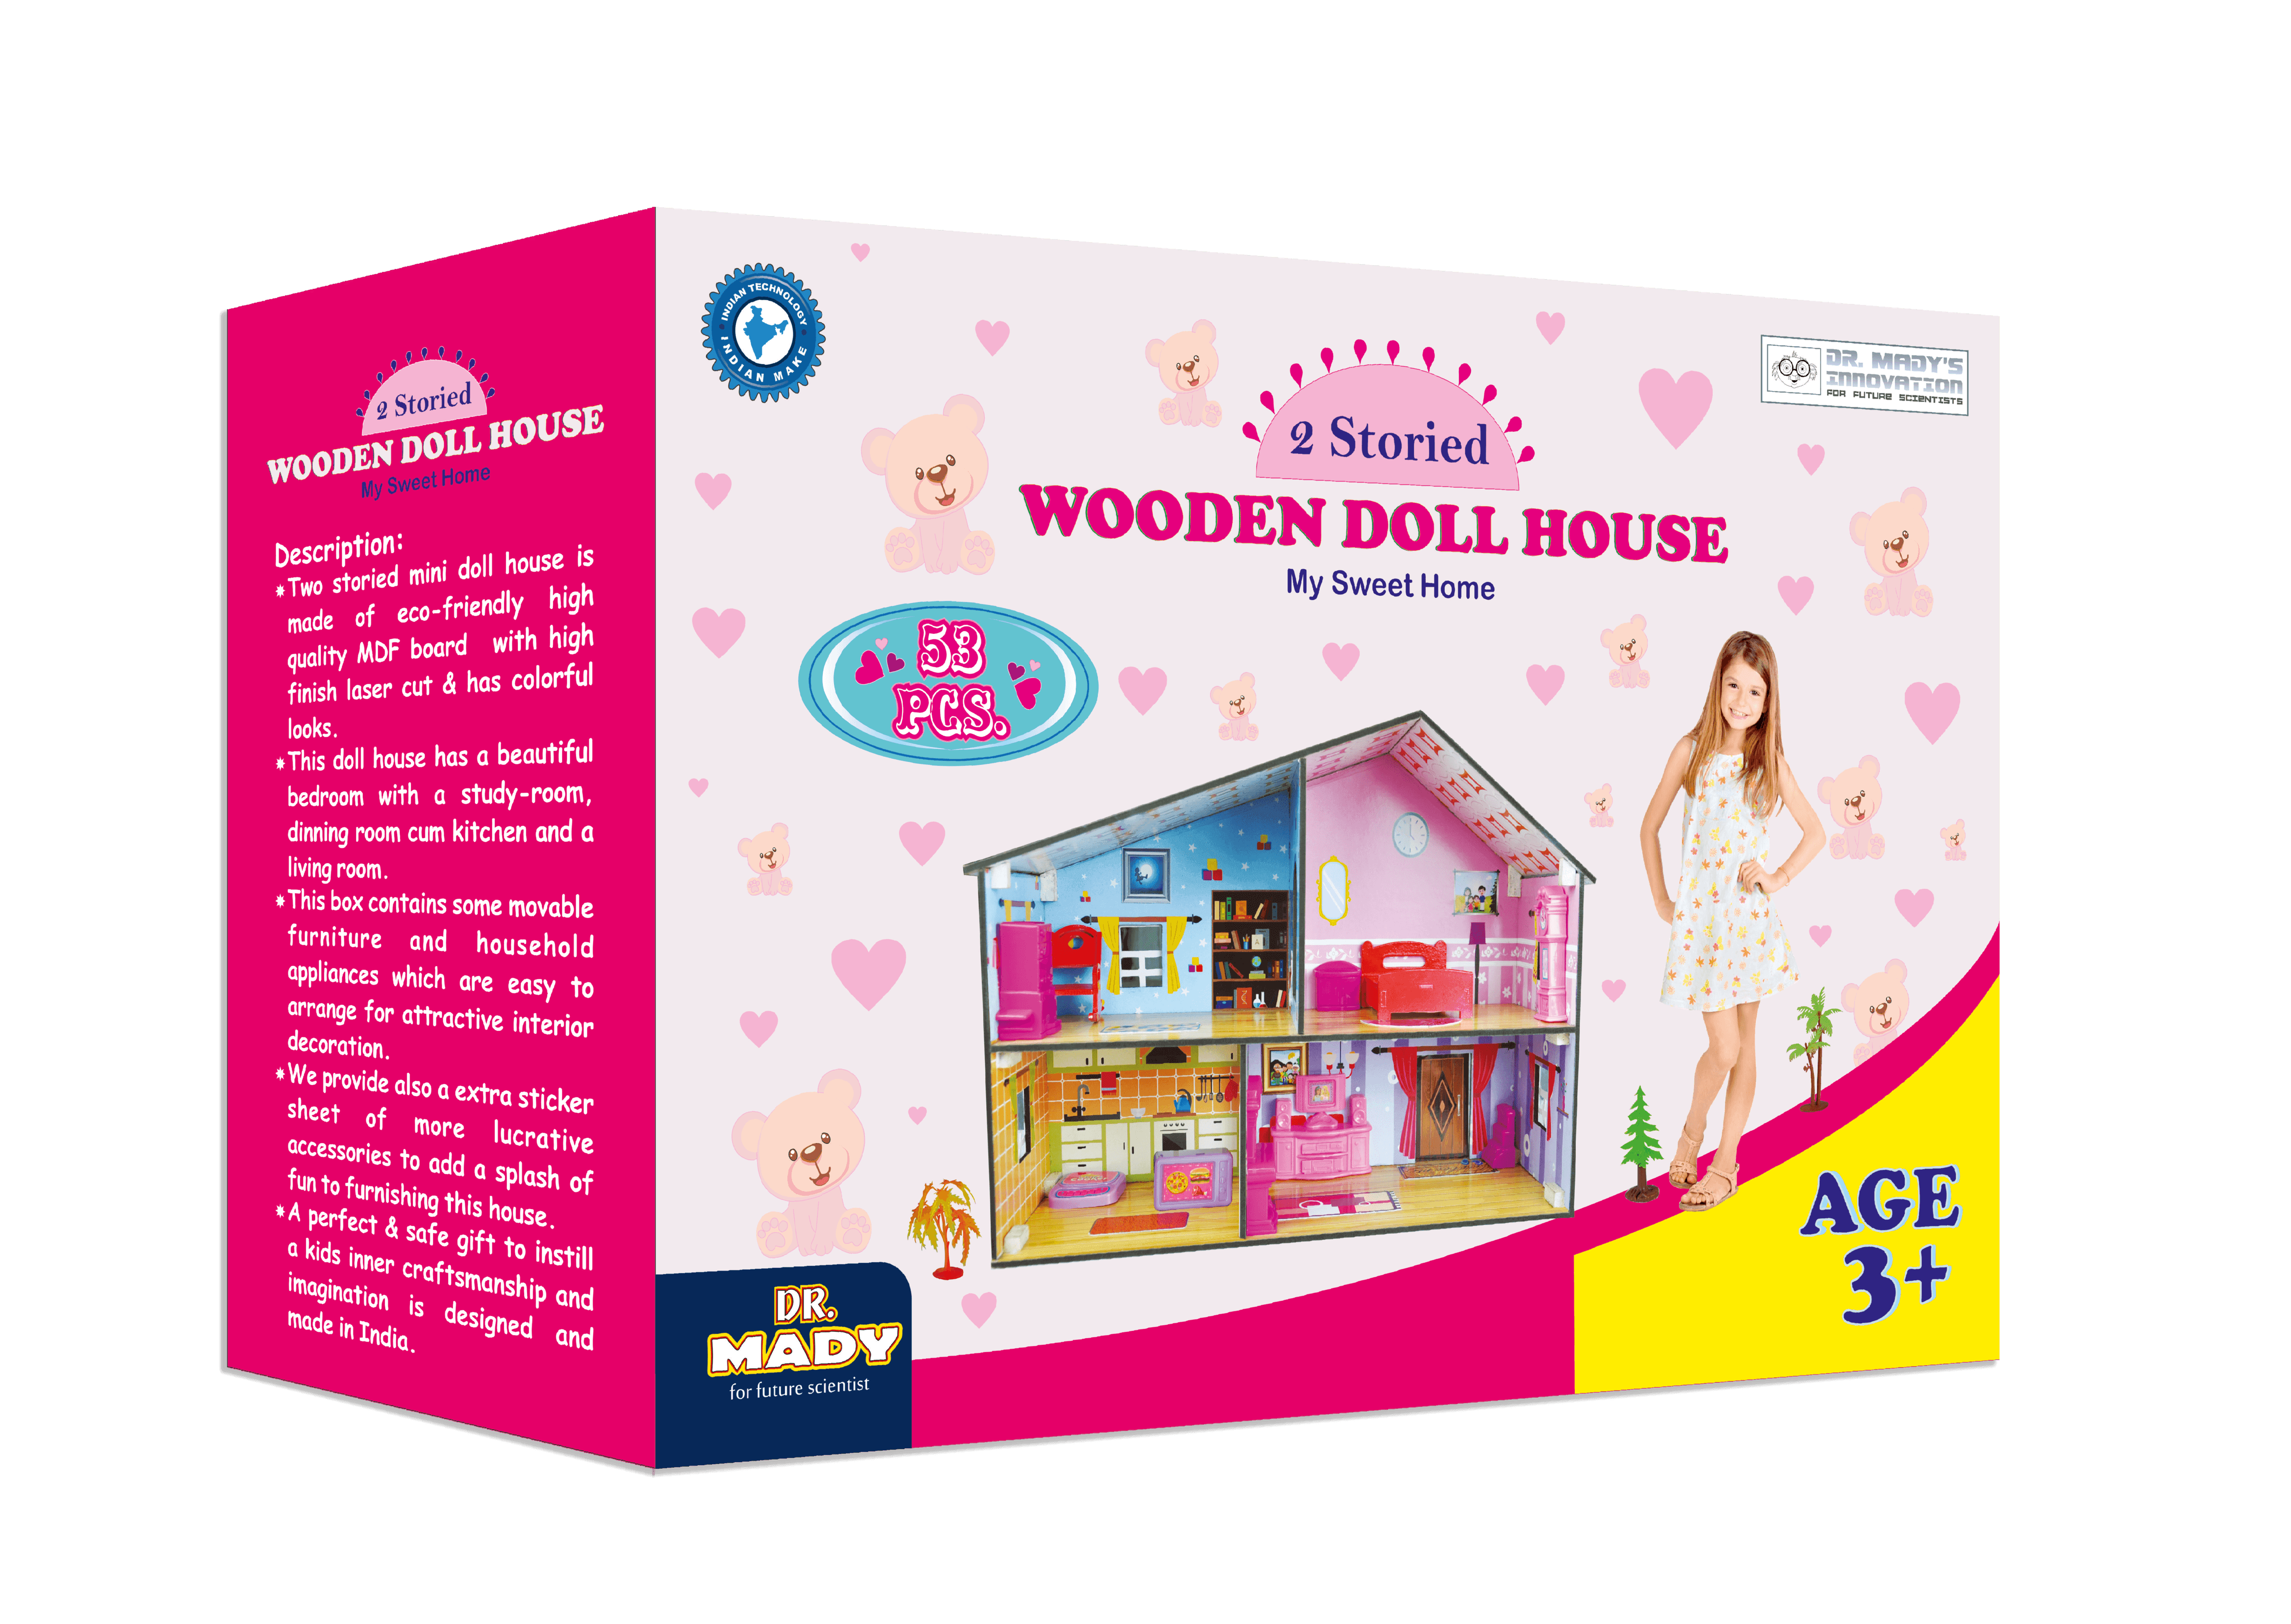 Mini Doll House for Kids